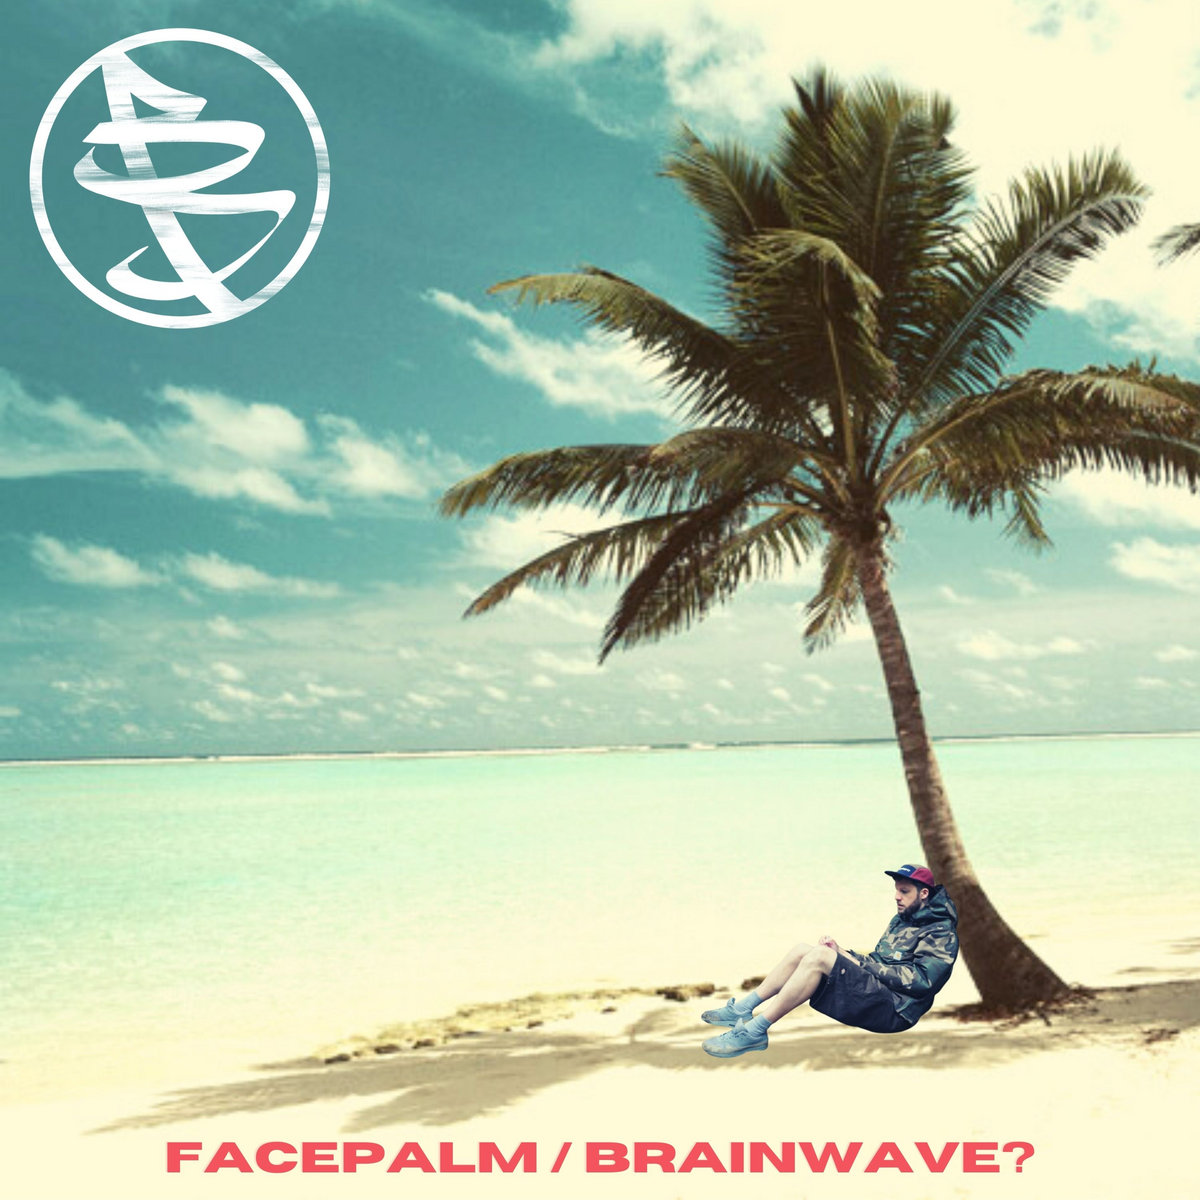 Facepalm / Brainwave?